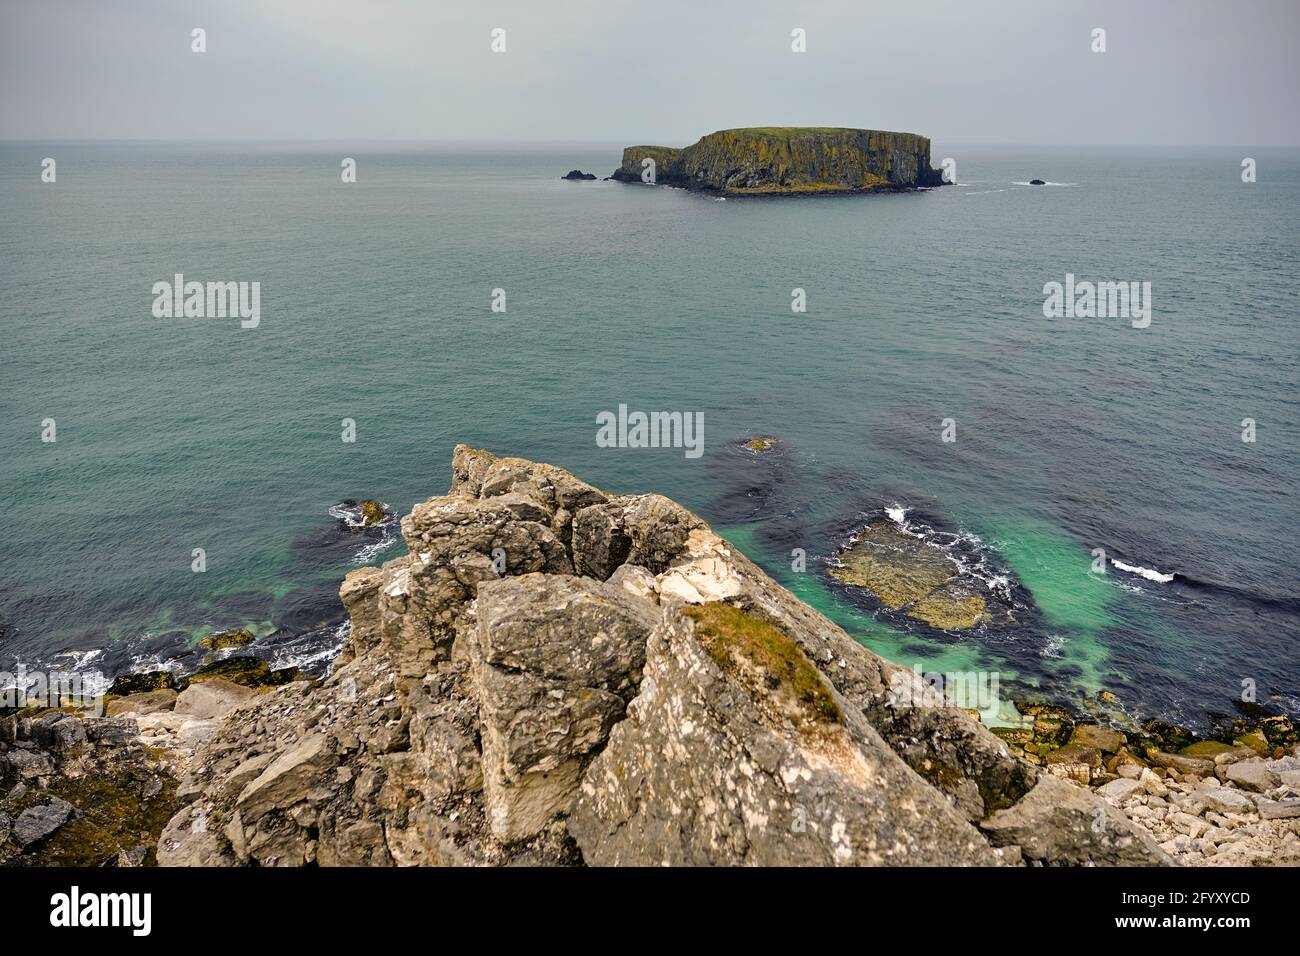 Ruvida costa del Nord Oceano Atlantico, Ballycastle, Irlanda del Nord, Regno Unito, 2018 Foto Stock